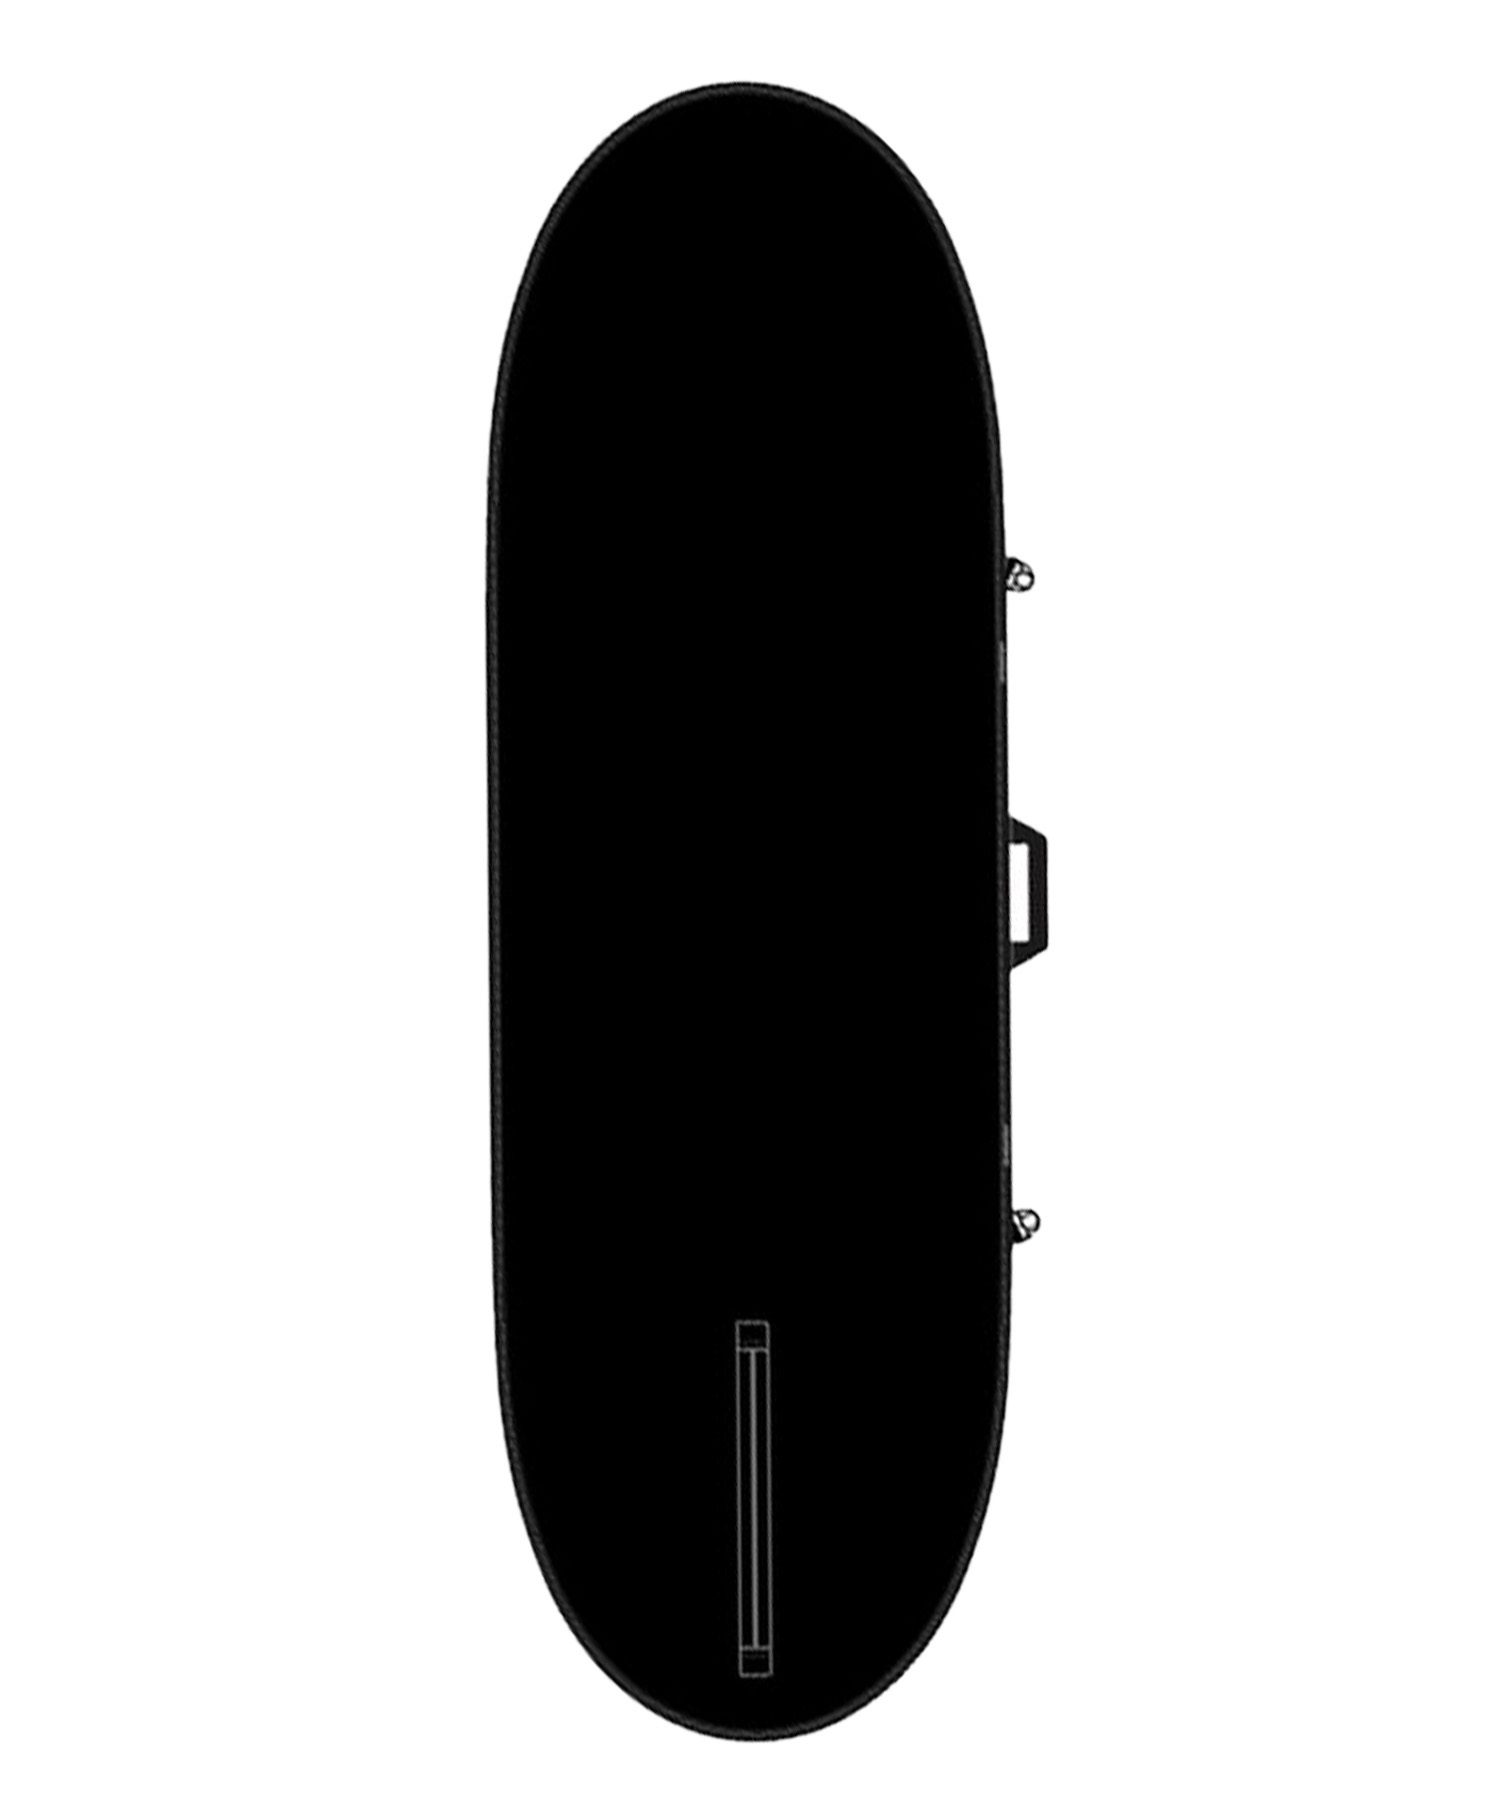 SYNDICATE シンジケートHRD JPN BOARD BAG FUN S 6’7FT ショートボード ES-01180V6631  サーフィン ハードケース  ショートボード用 ムラサキスポーツ(BLK1-6.6)